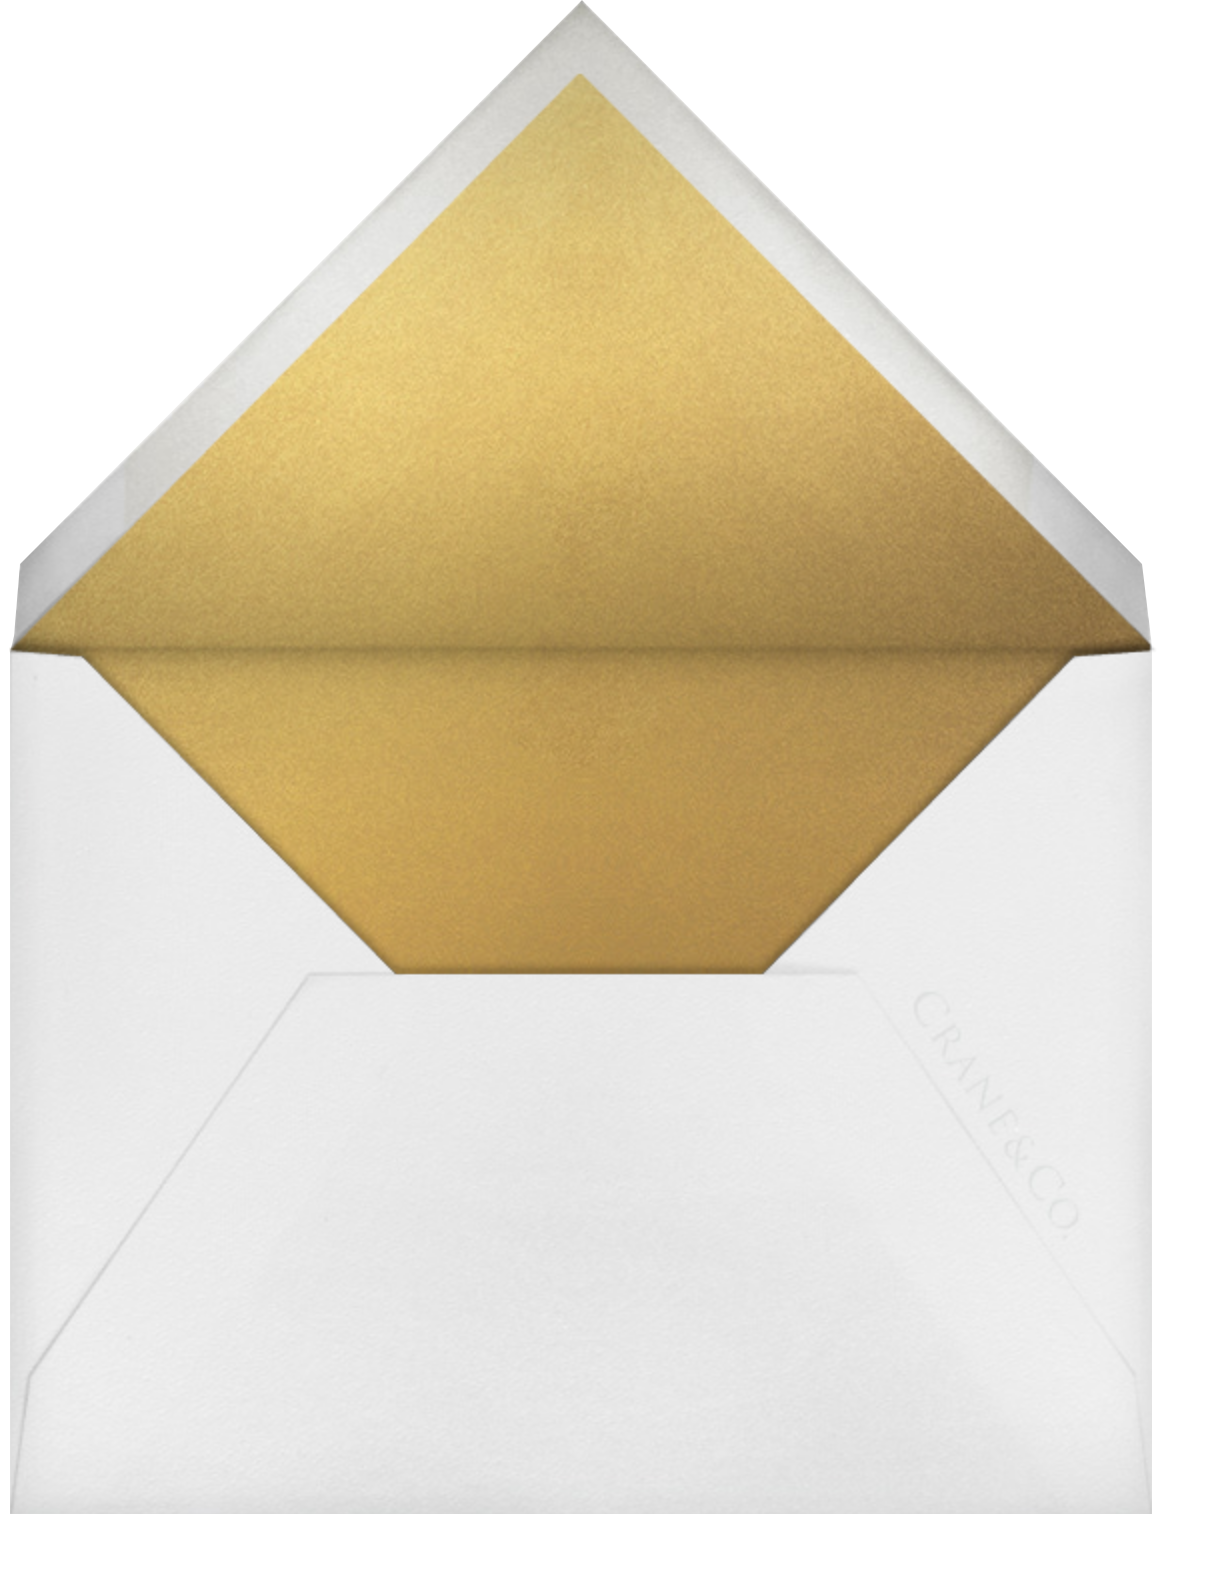 Forsythia (Thank You) - Medium Gold - Crane & Co. - Envelope